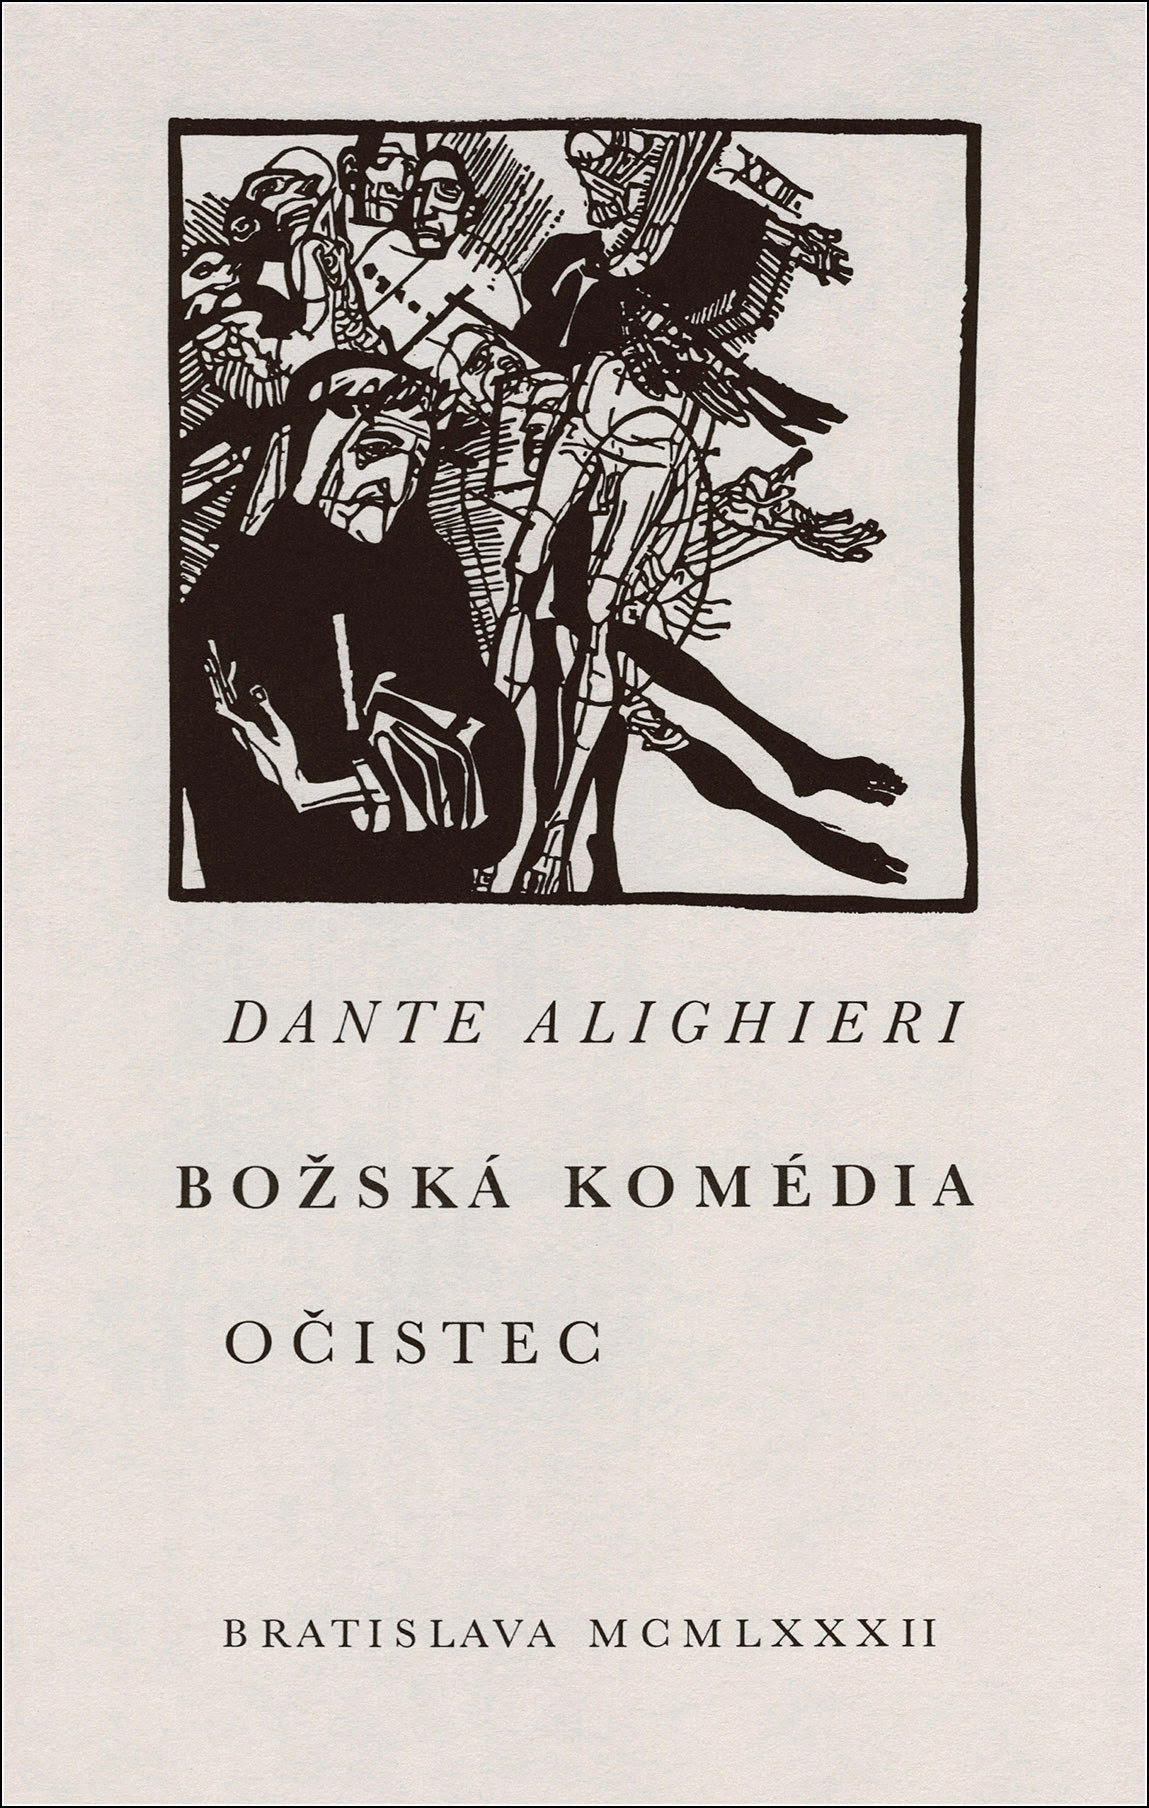 Vincent Hložník, Dante Alighieri, Božská komédia